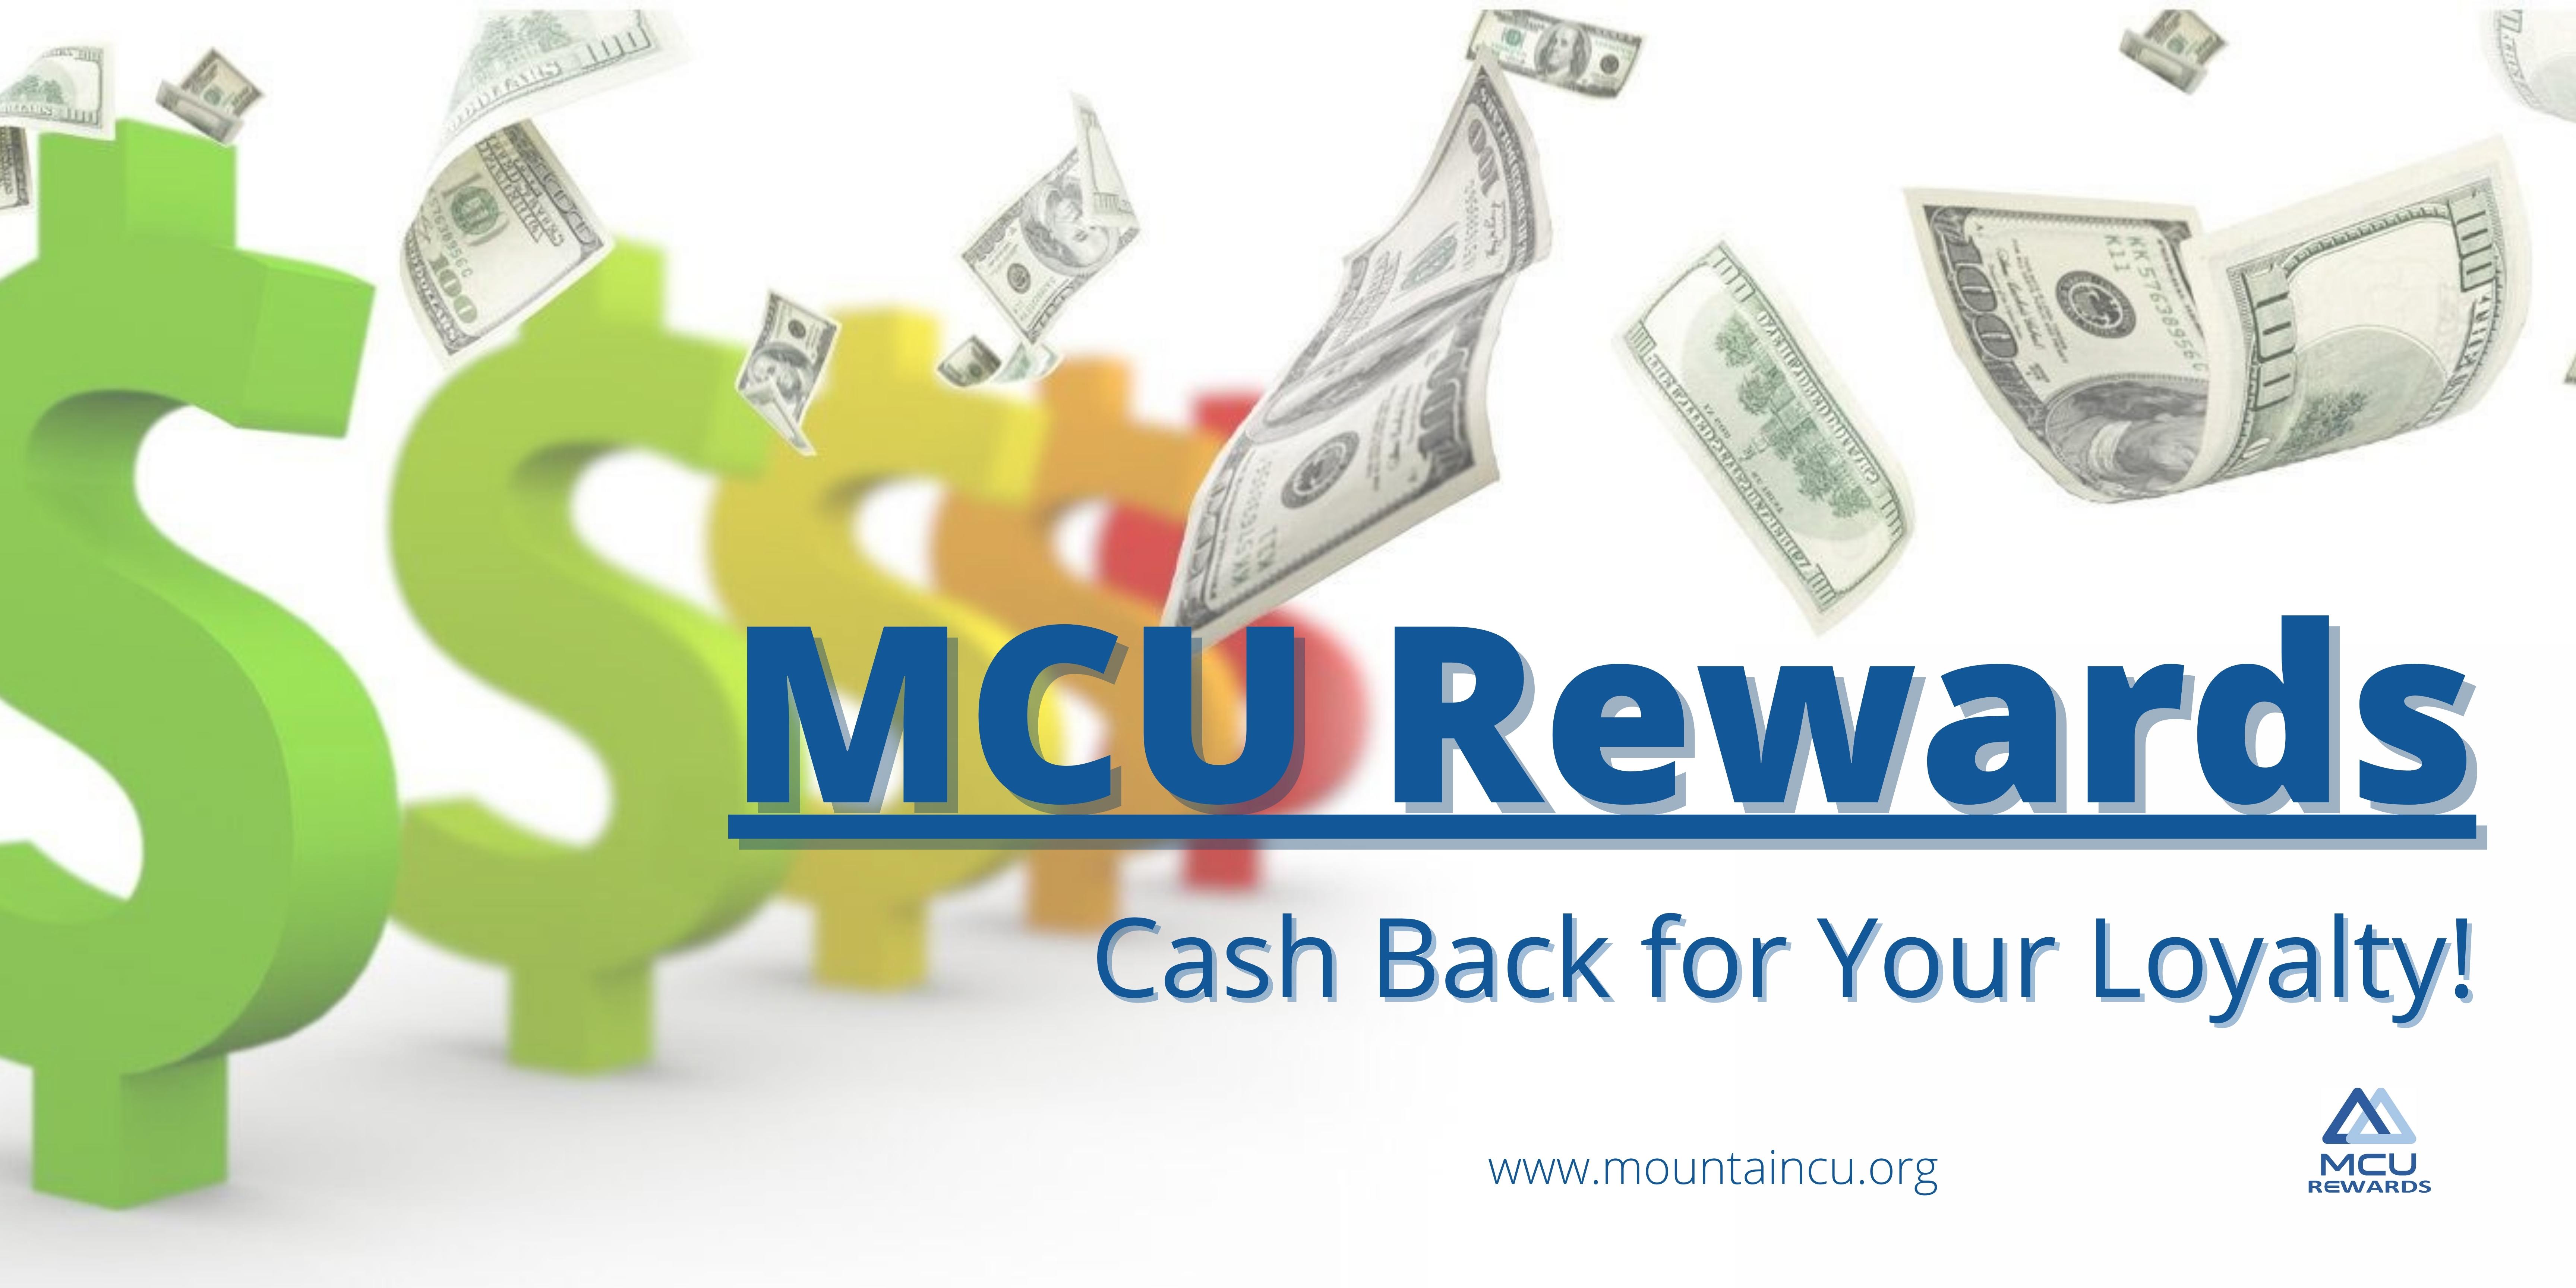 MCU Rewards